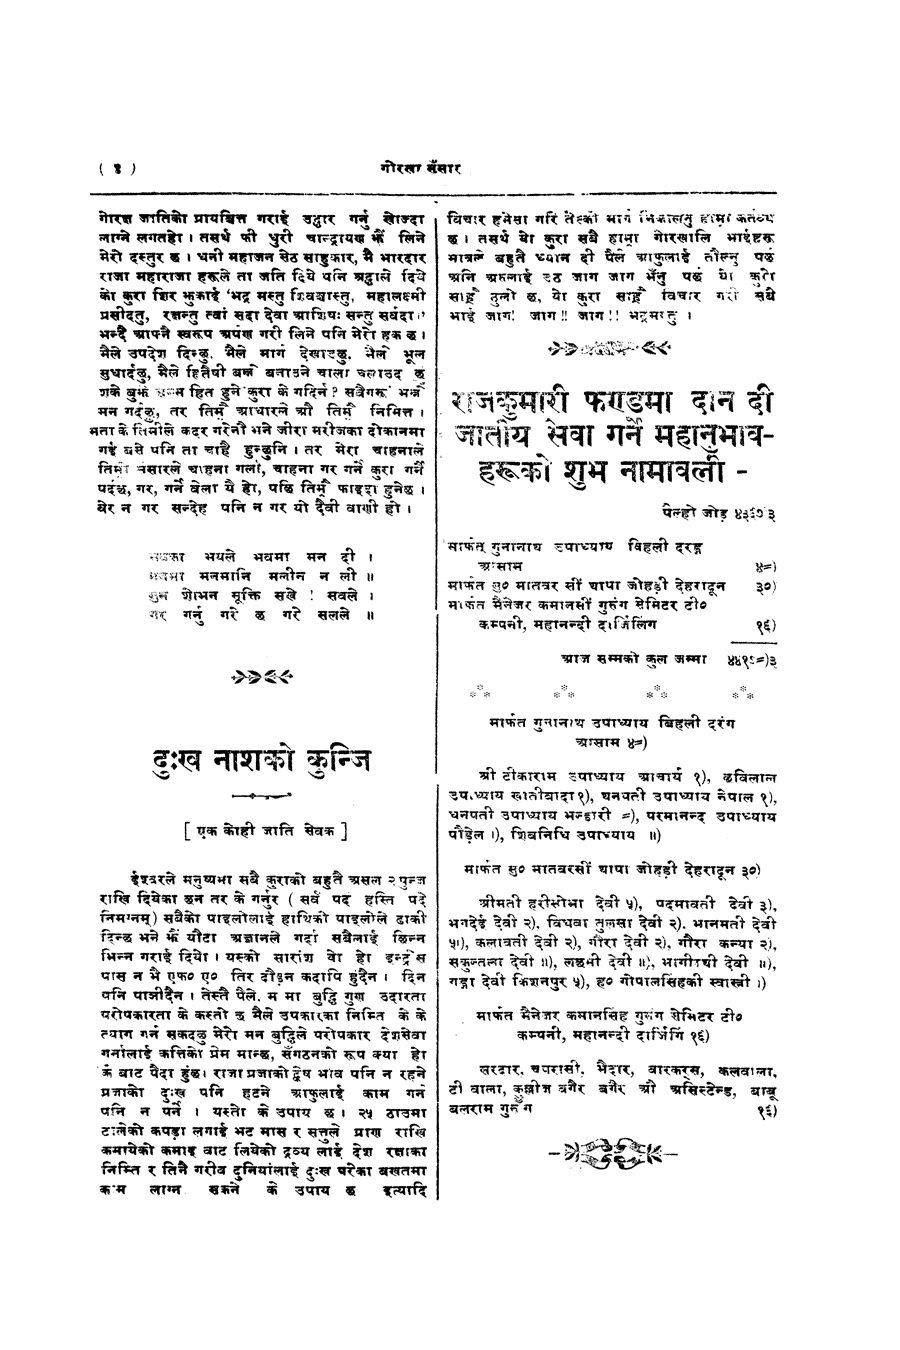 Gorkha Sansar, 27 Sept 1927, page 4